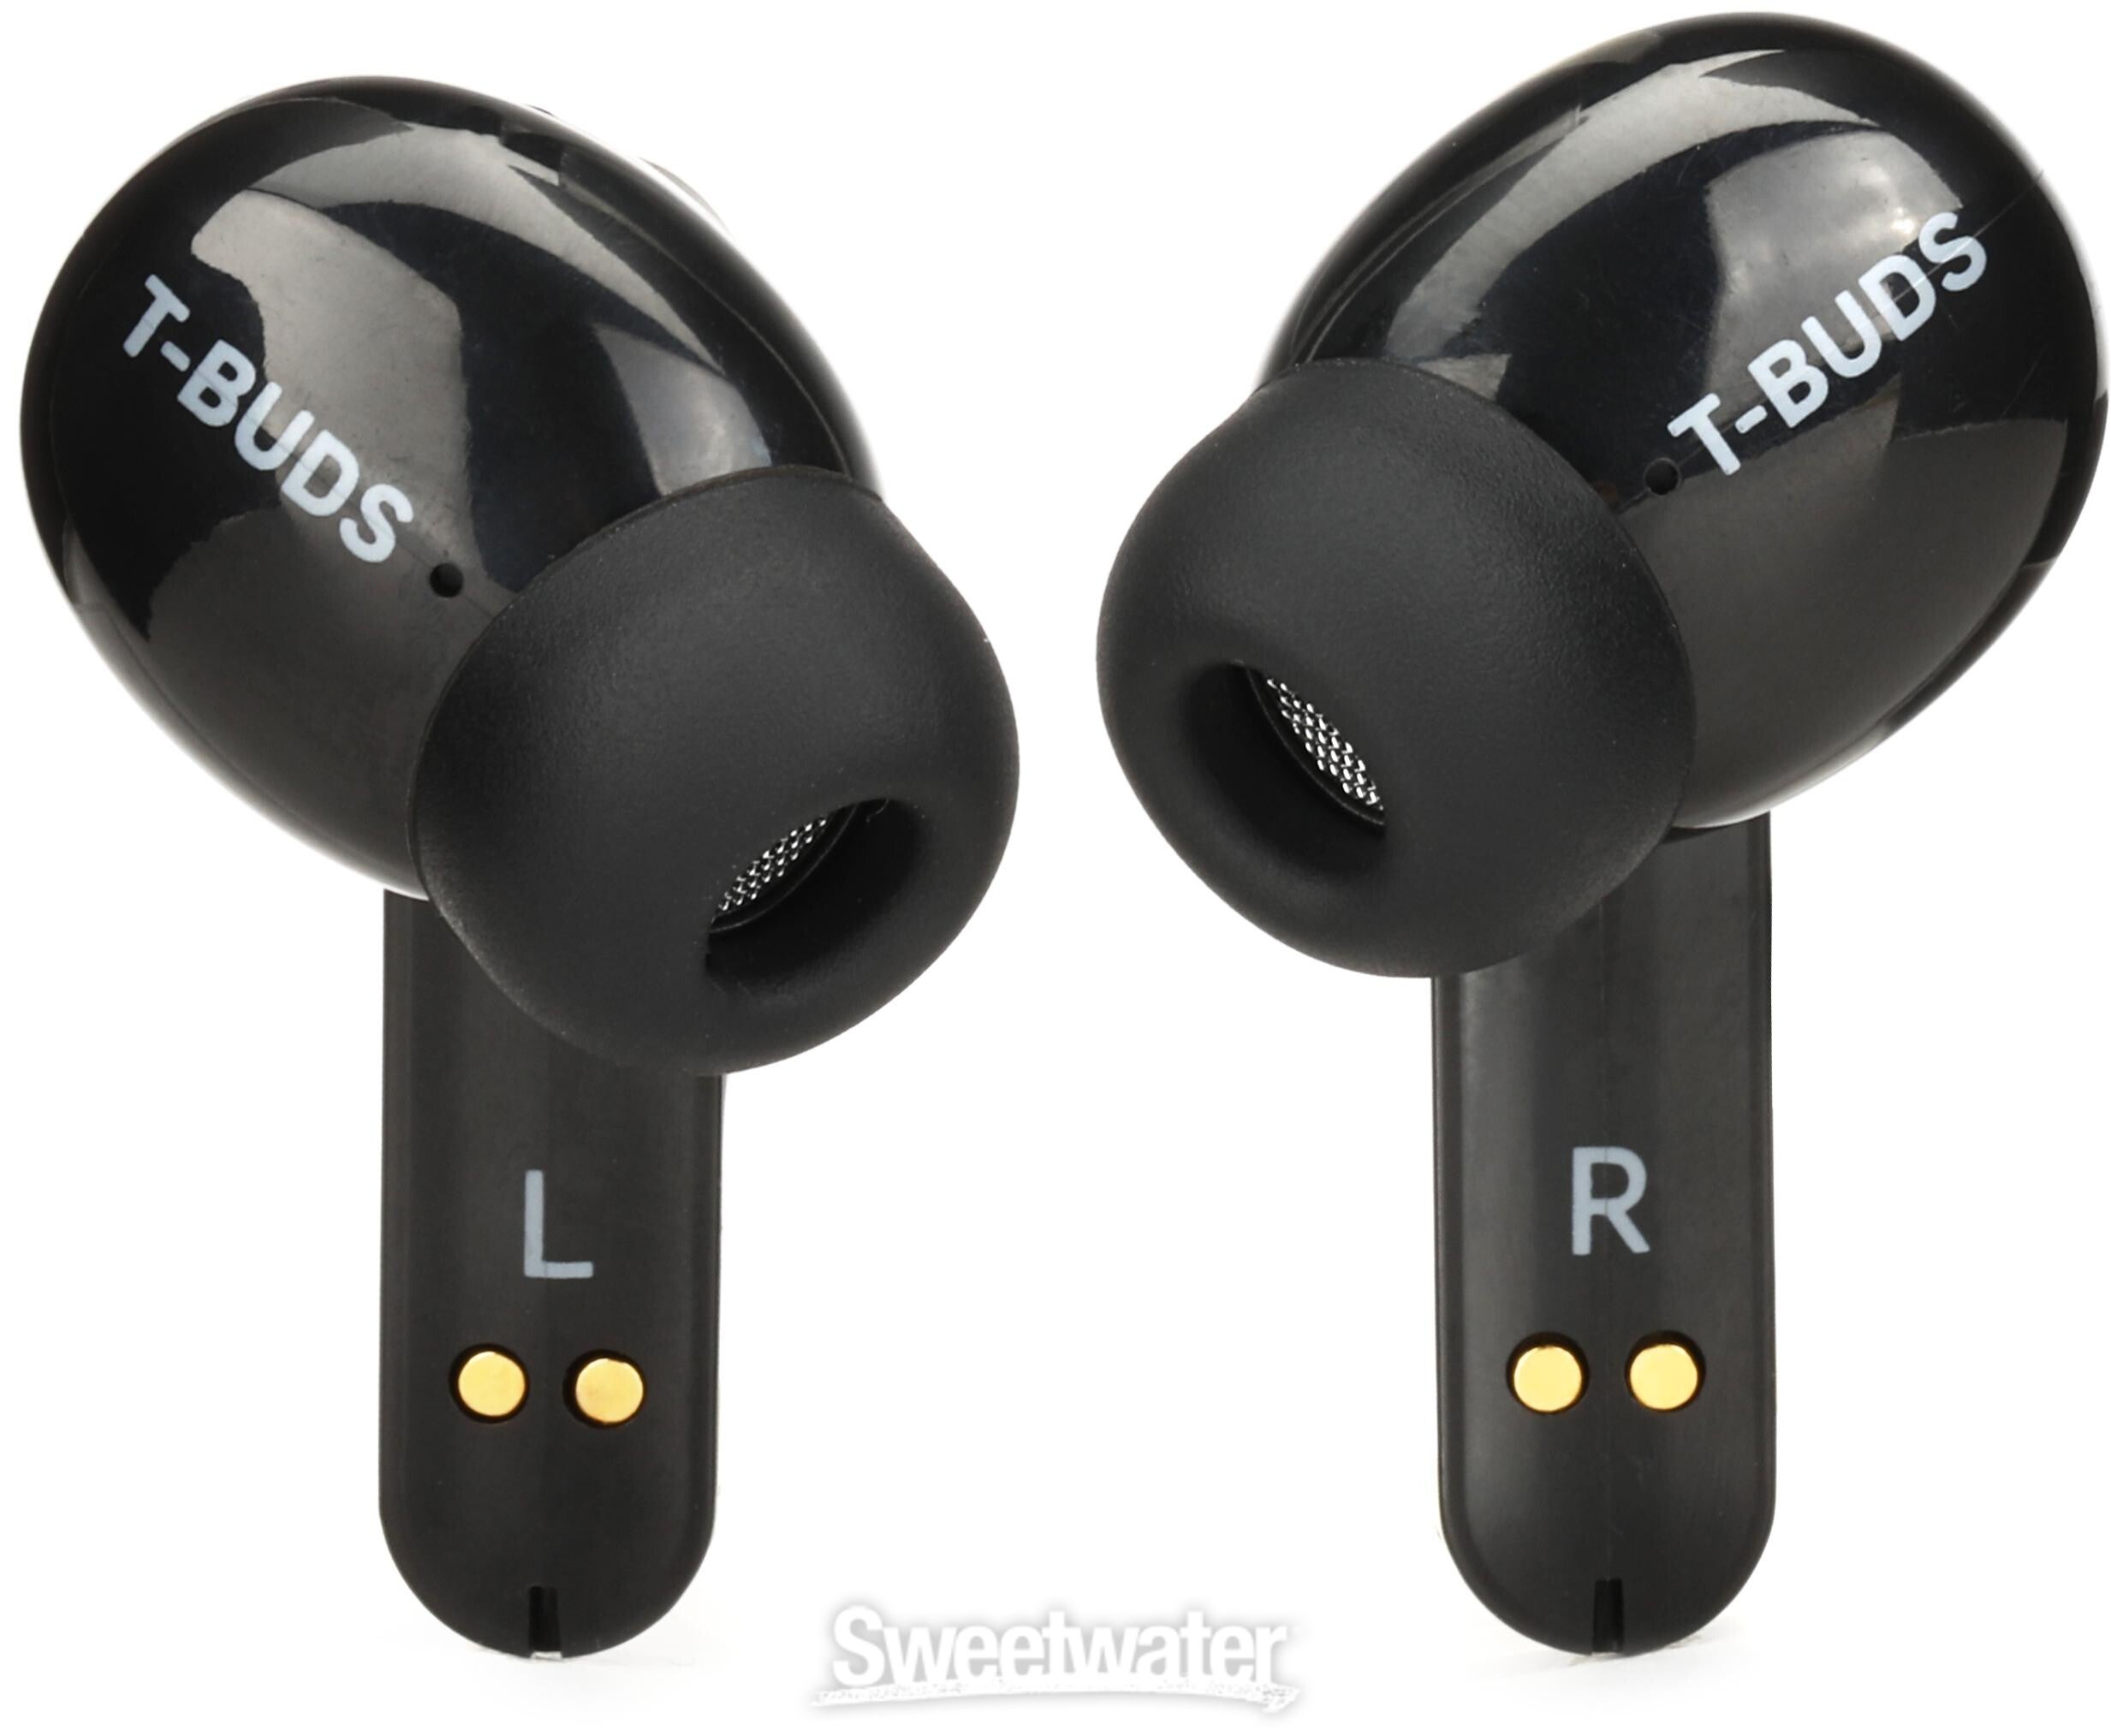 Behringer T-Buds Wireless Bluetooth Earphones